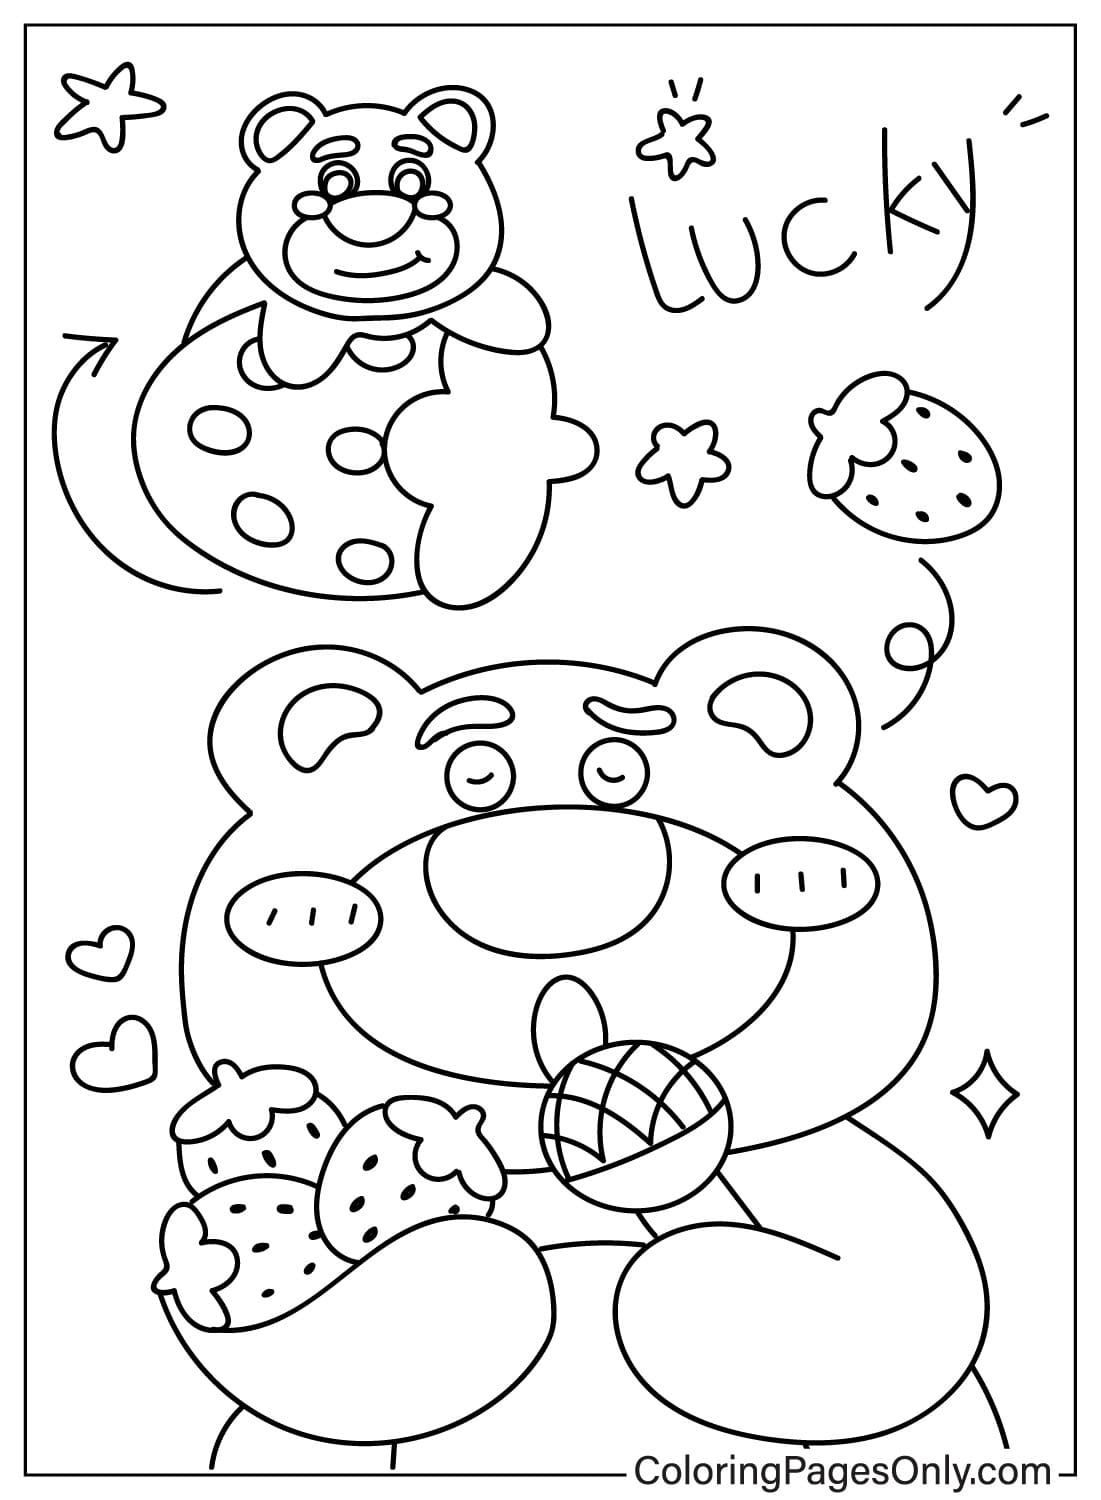 Lotso Bear Malvorlage zum Ausdrucken von Lotso Bear